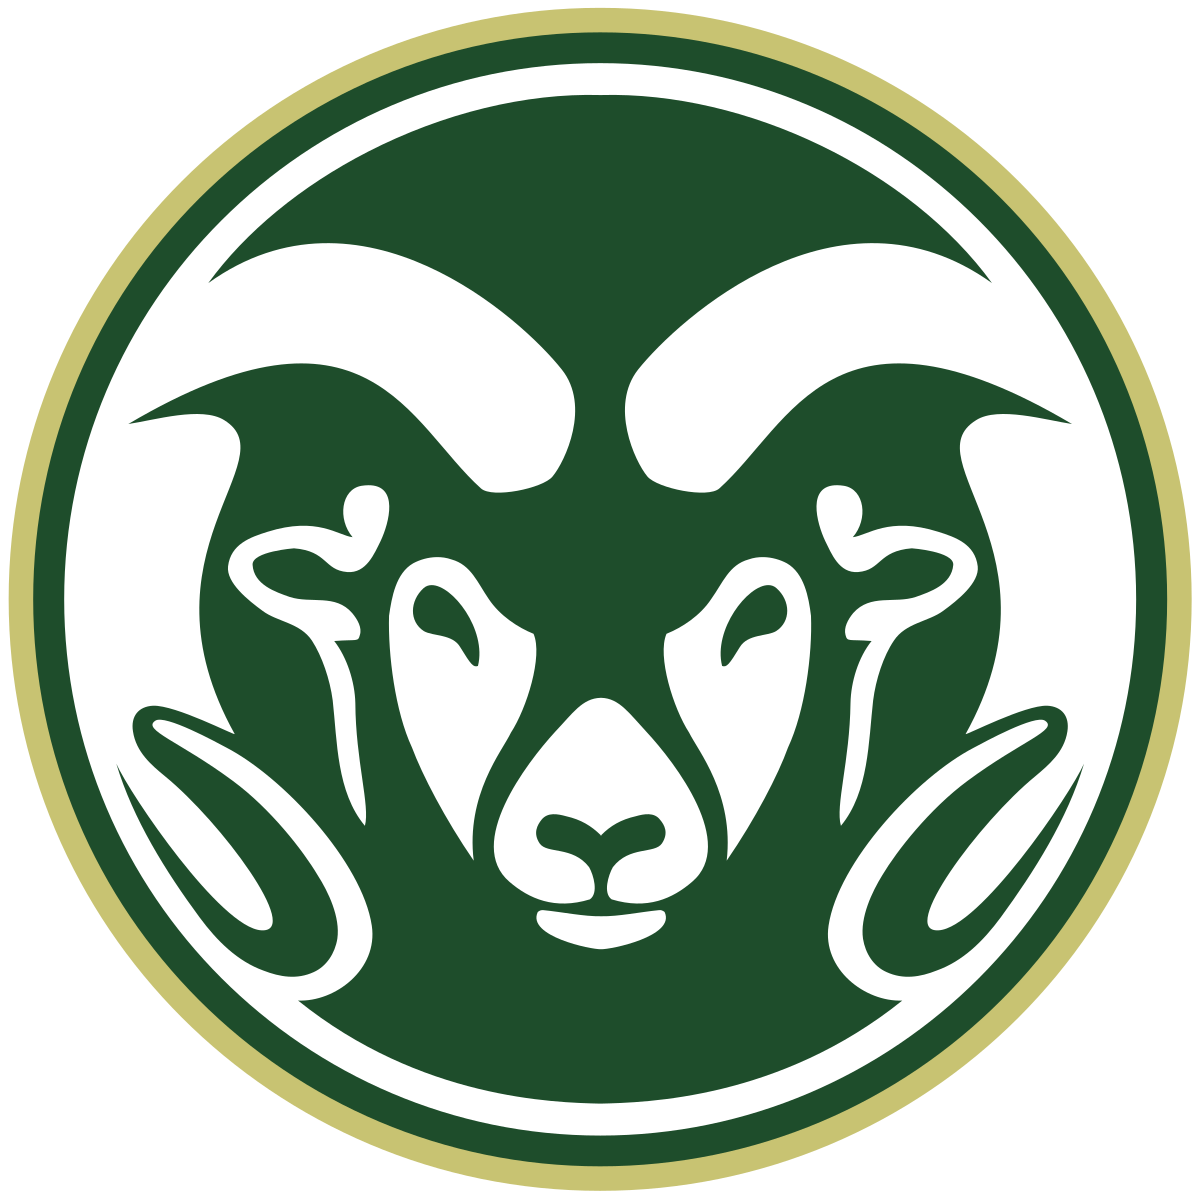 Colorado State Rams Fan Shop